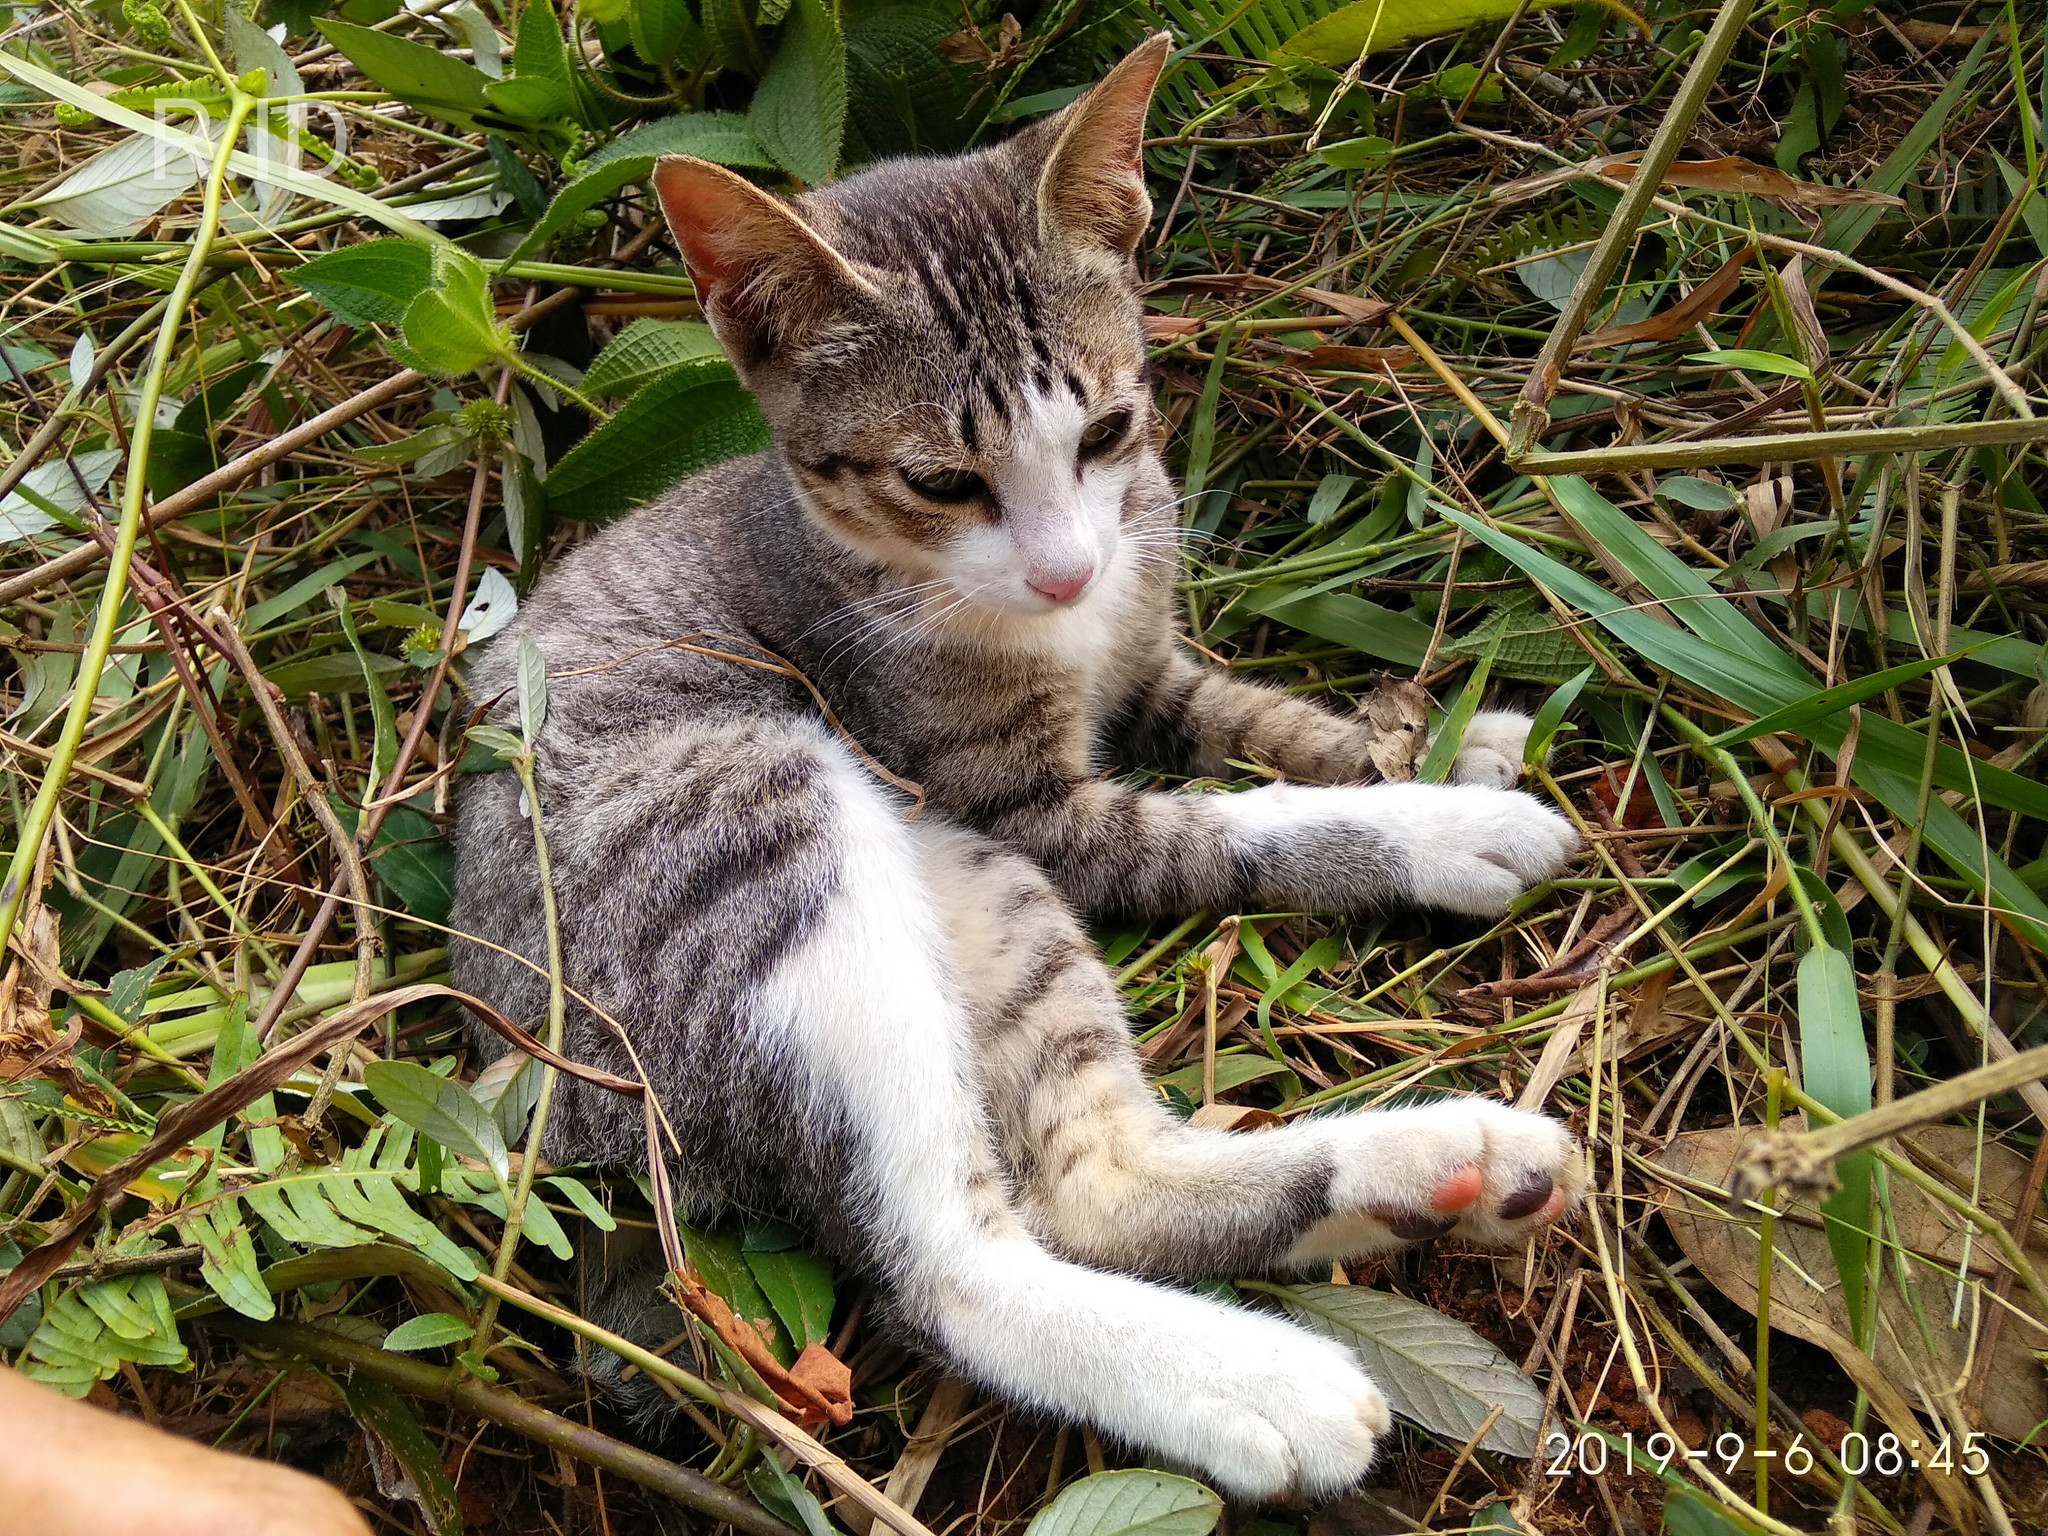 Kucing Yang Lagi Santai Diatas Rumput